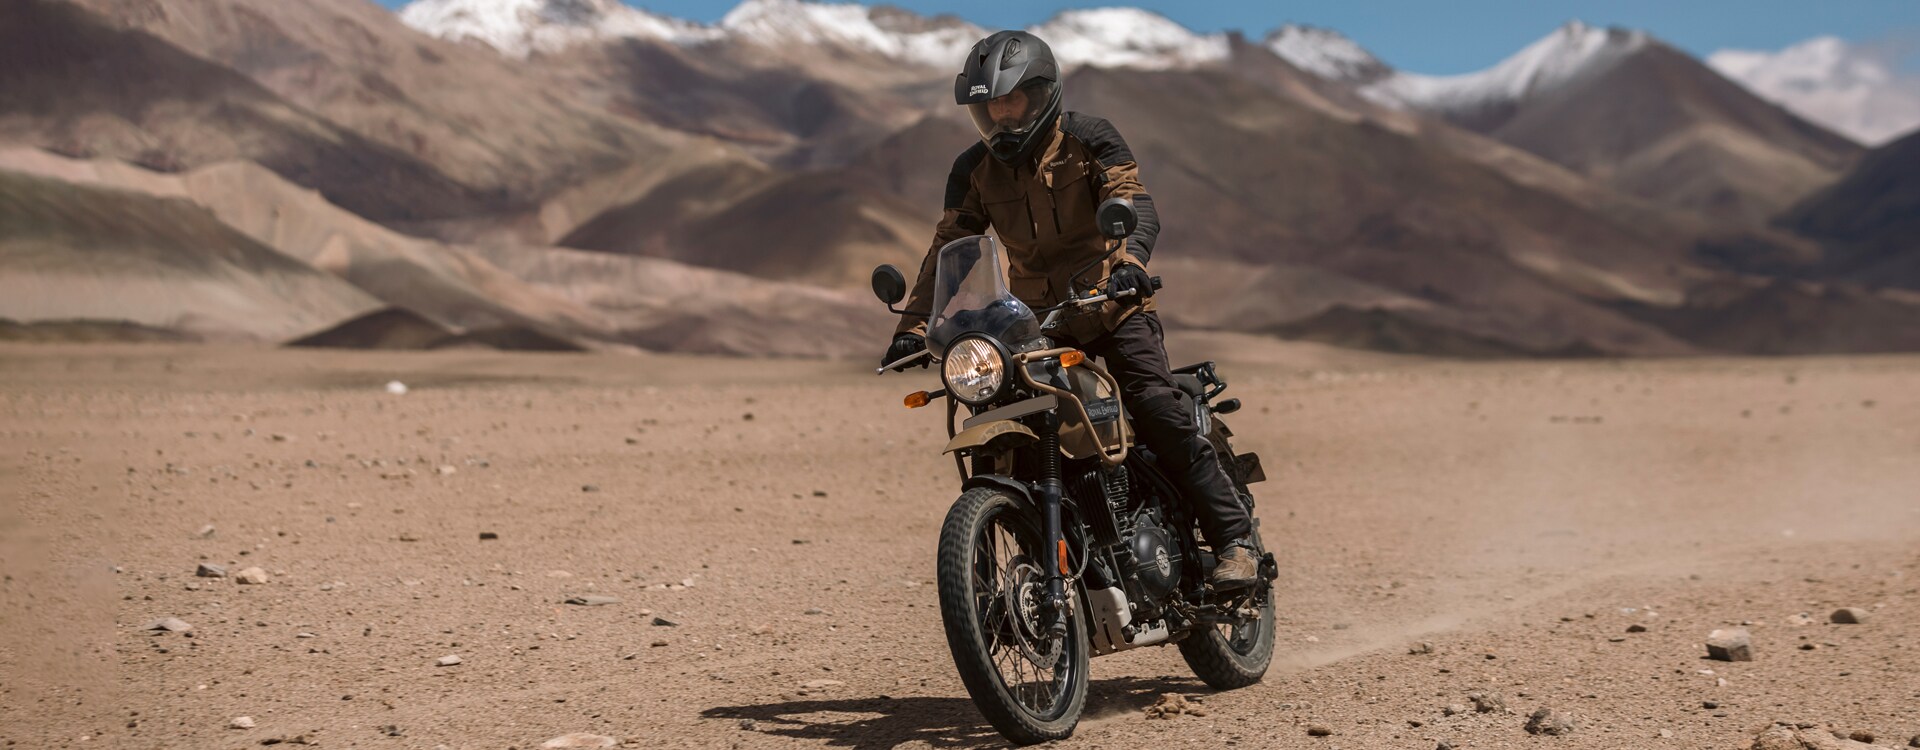 Himalayan - For an unshakable ride